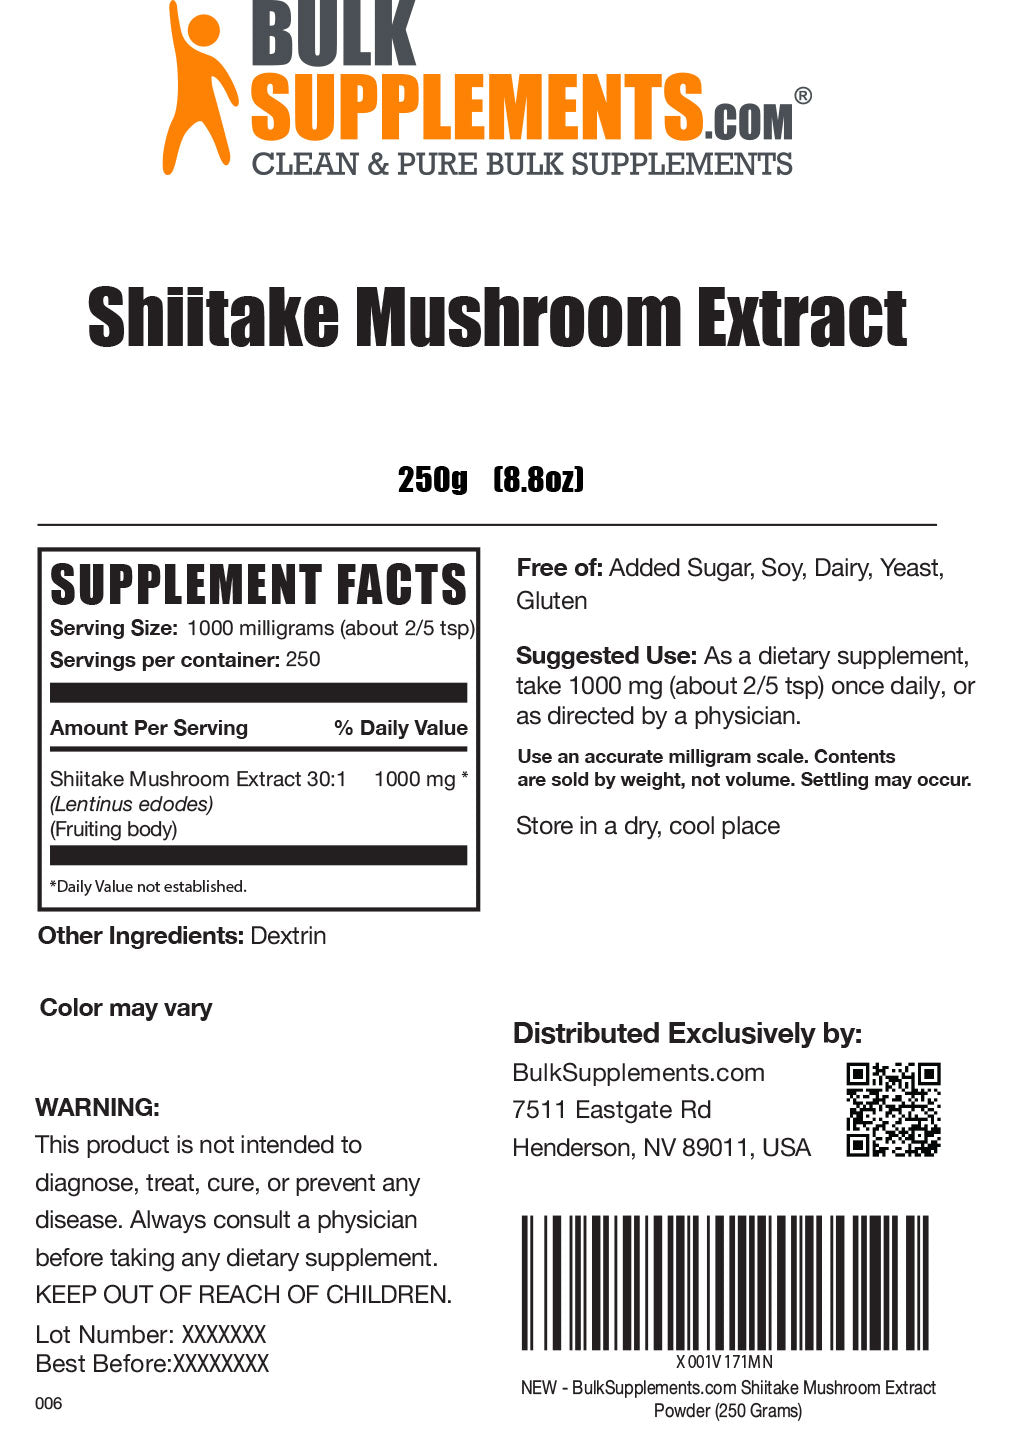 Shiitake Mushroom Extract Label 250g